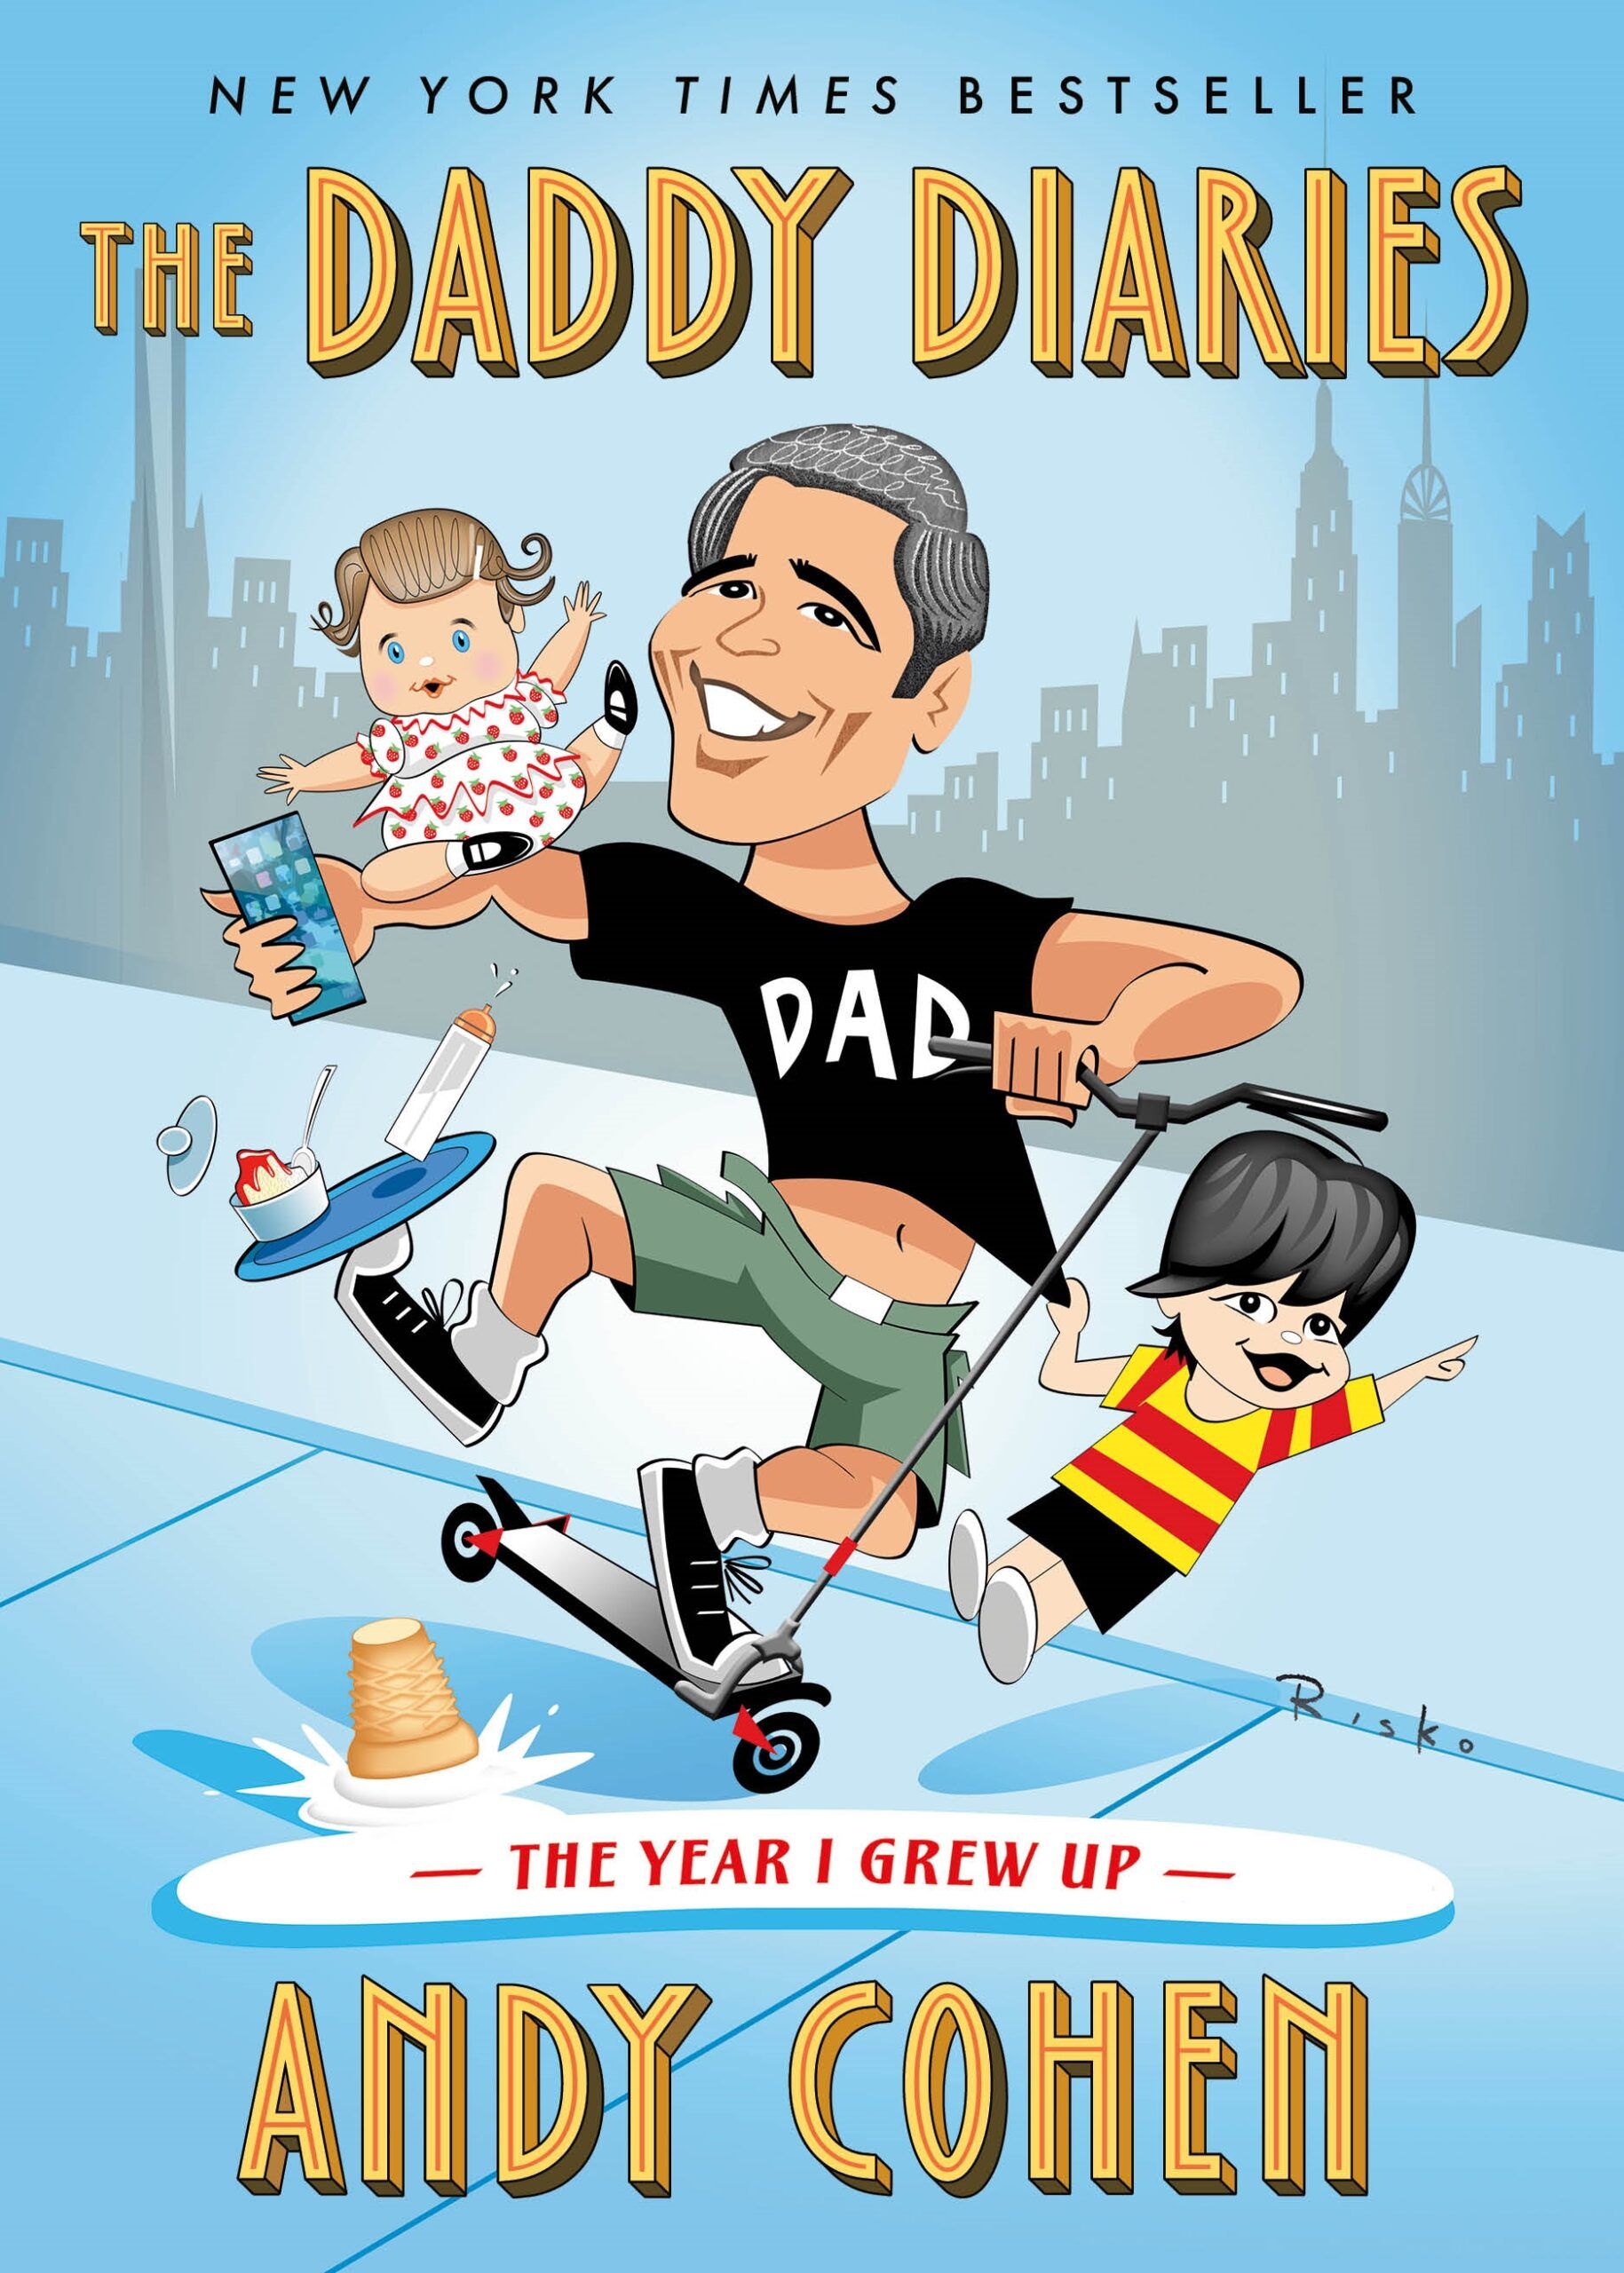 Daddies Win  The New Yorker